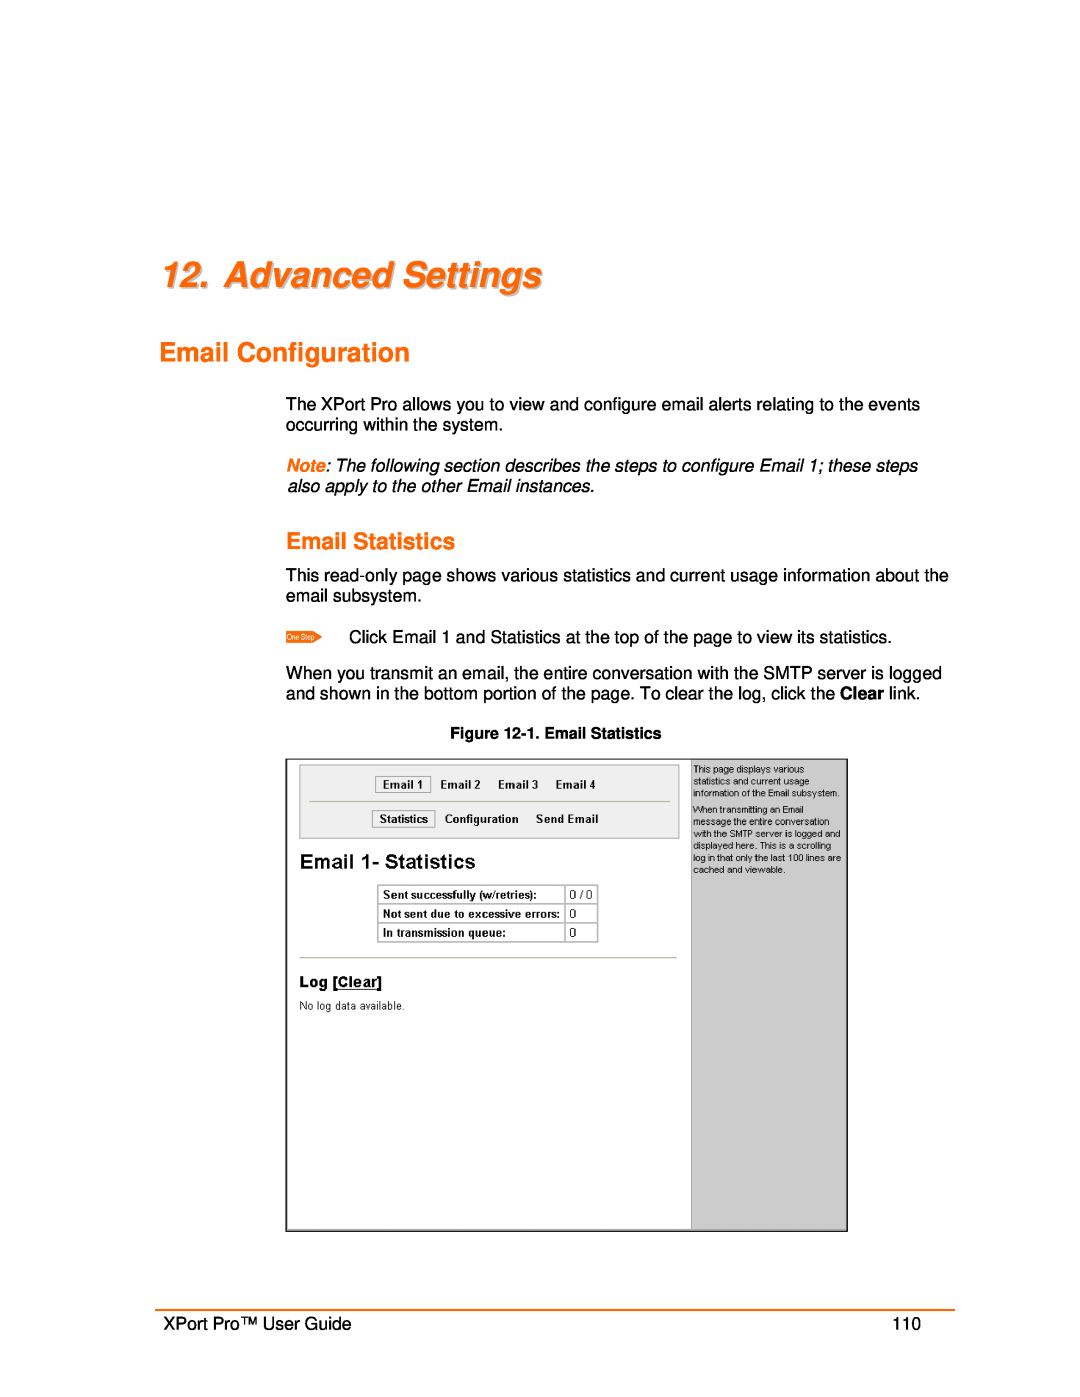 Lantronix 900-560 manual Advanced Settings, Email Configuration, Email Statistics 